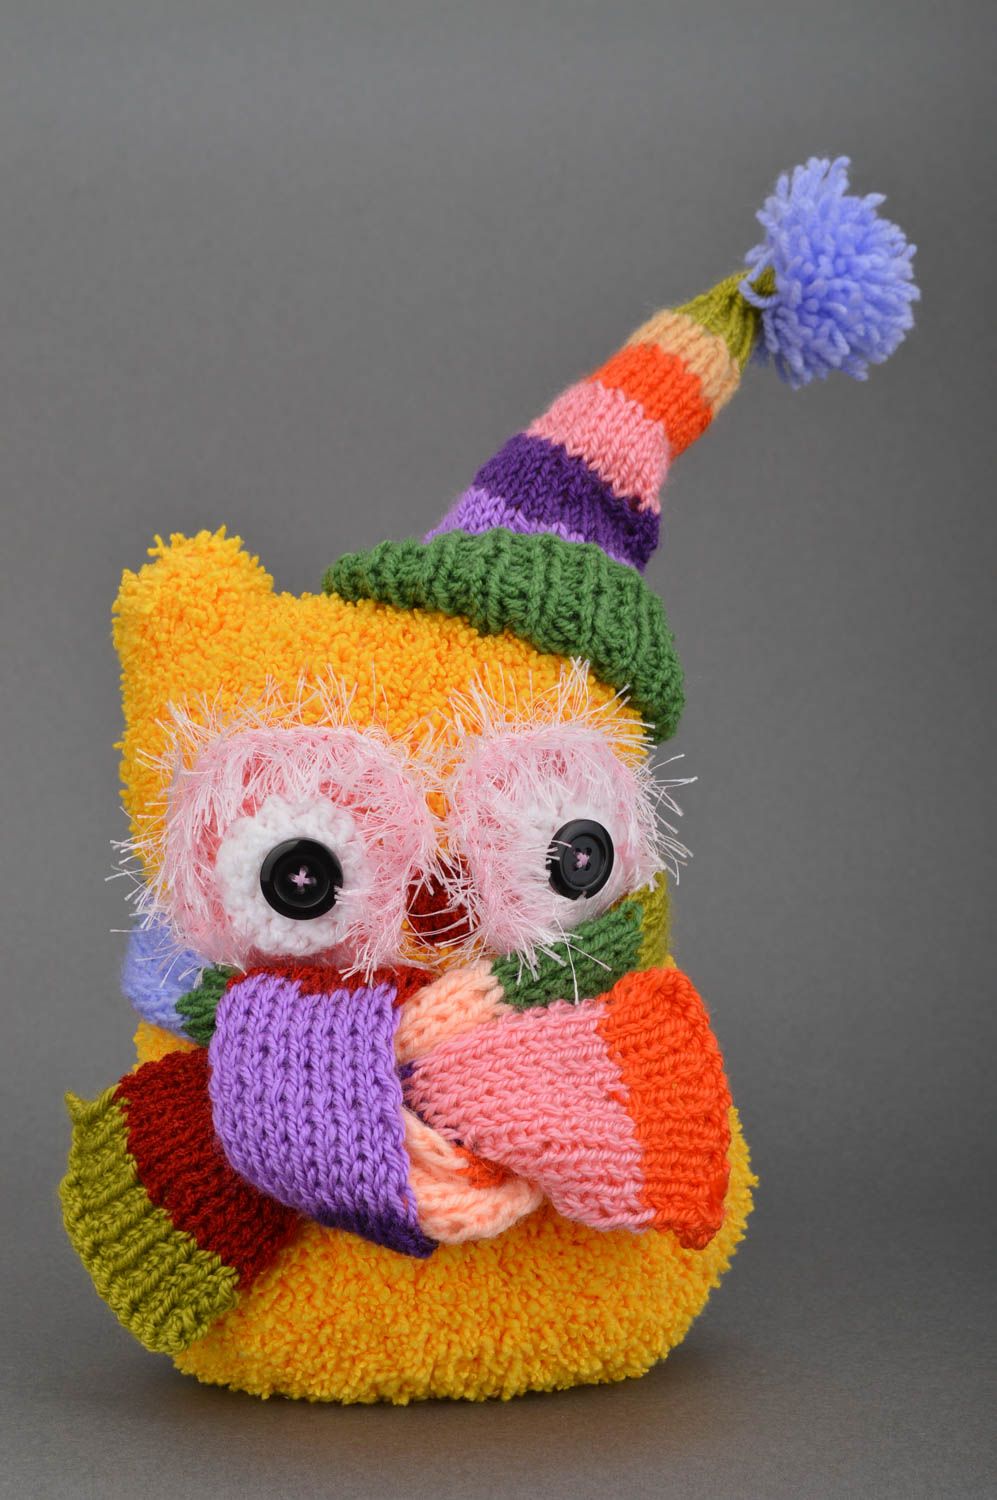 Decorative stuffed owl toy handmade soft toy gift for baby nursery decor ideas photo 3